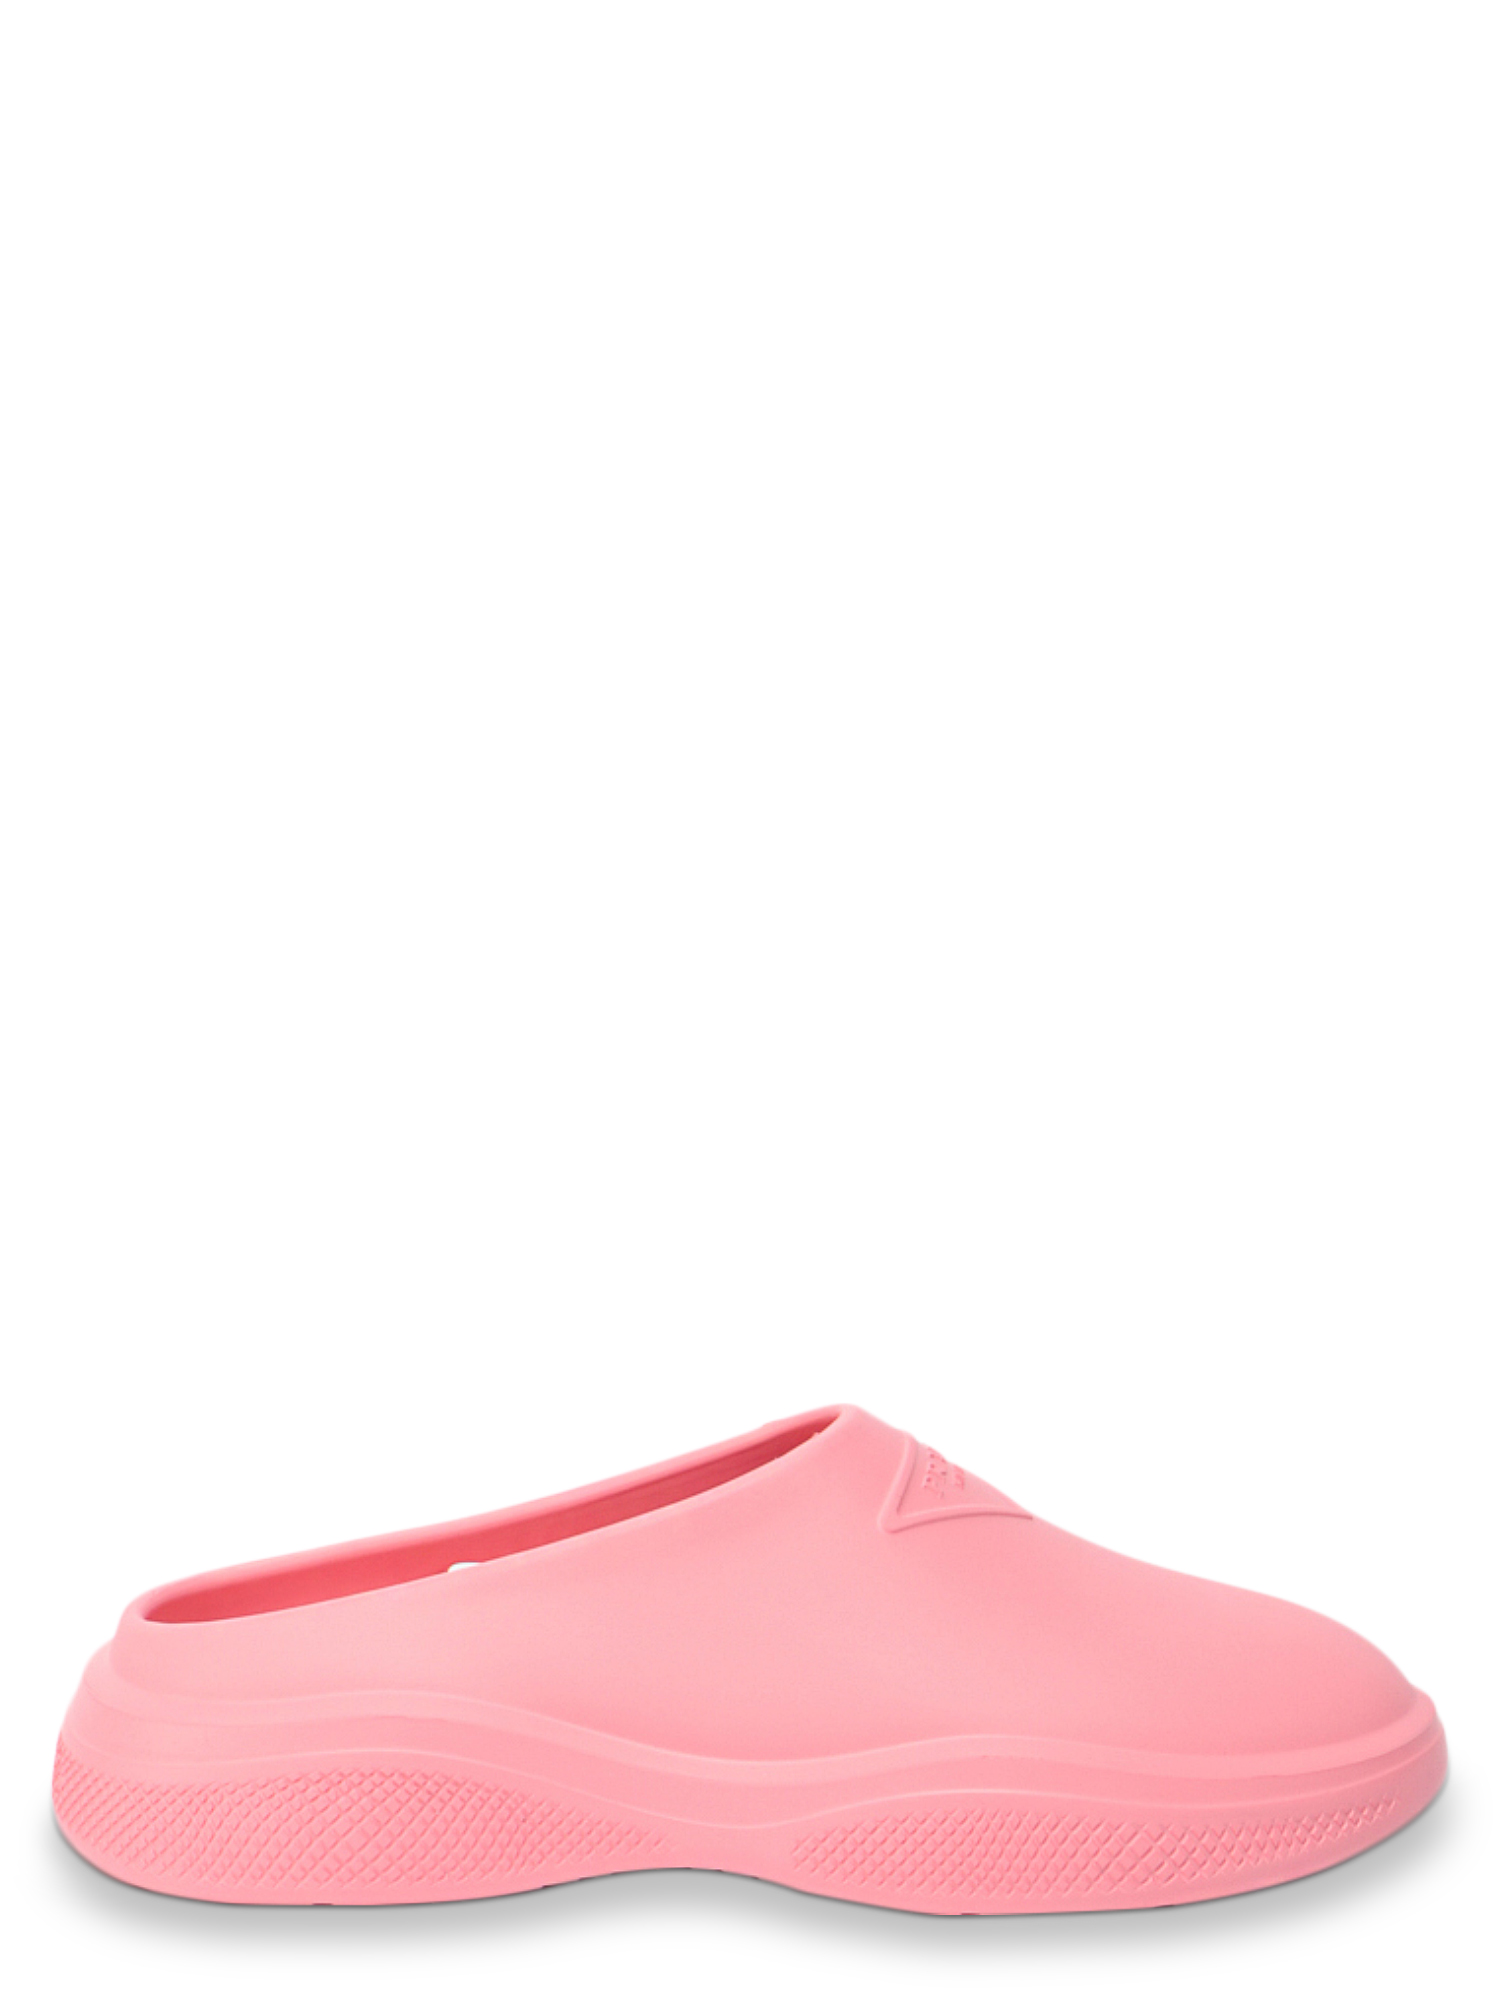 Prada Femme Slippers Pink Synthetic Fibers